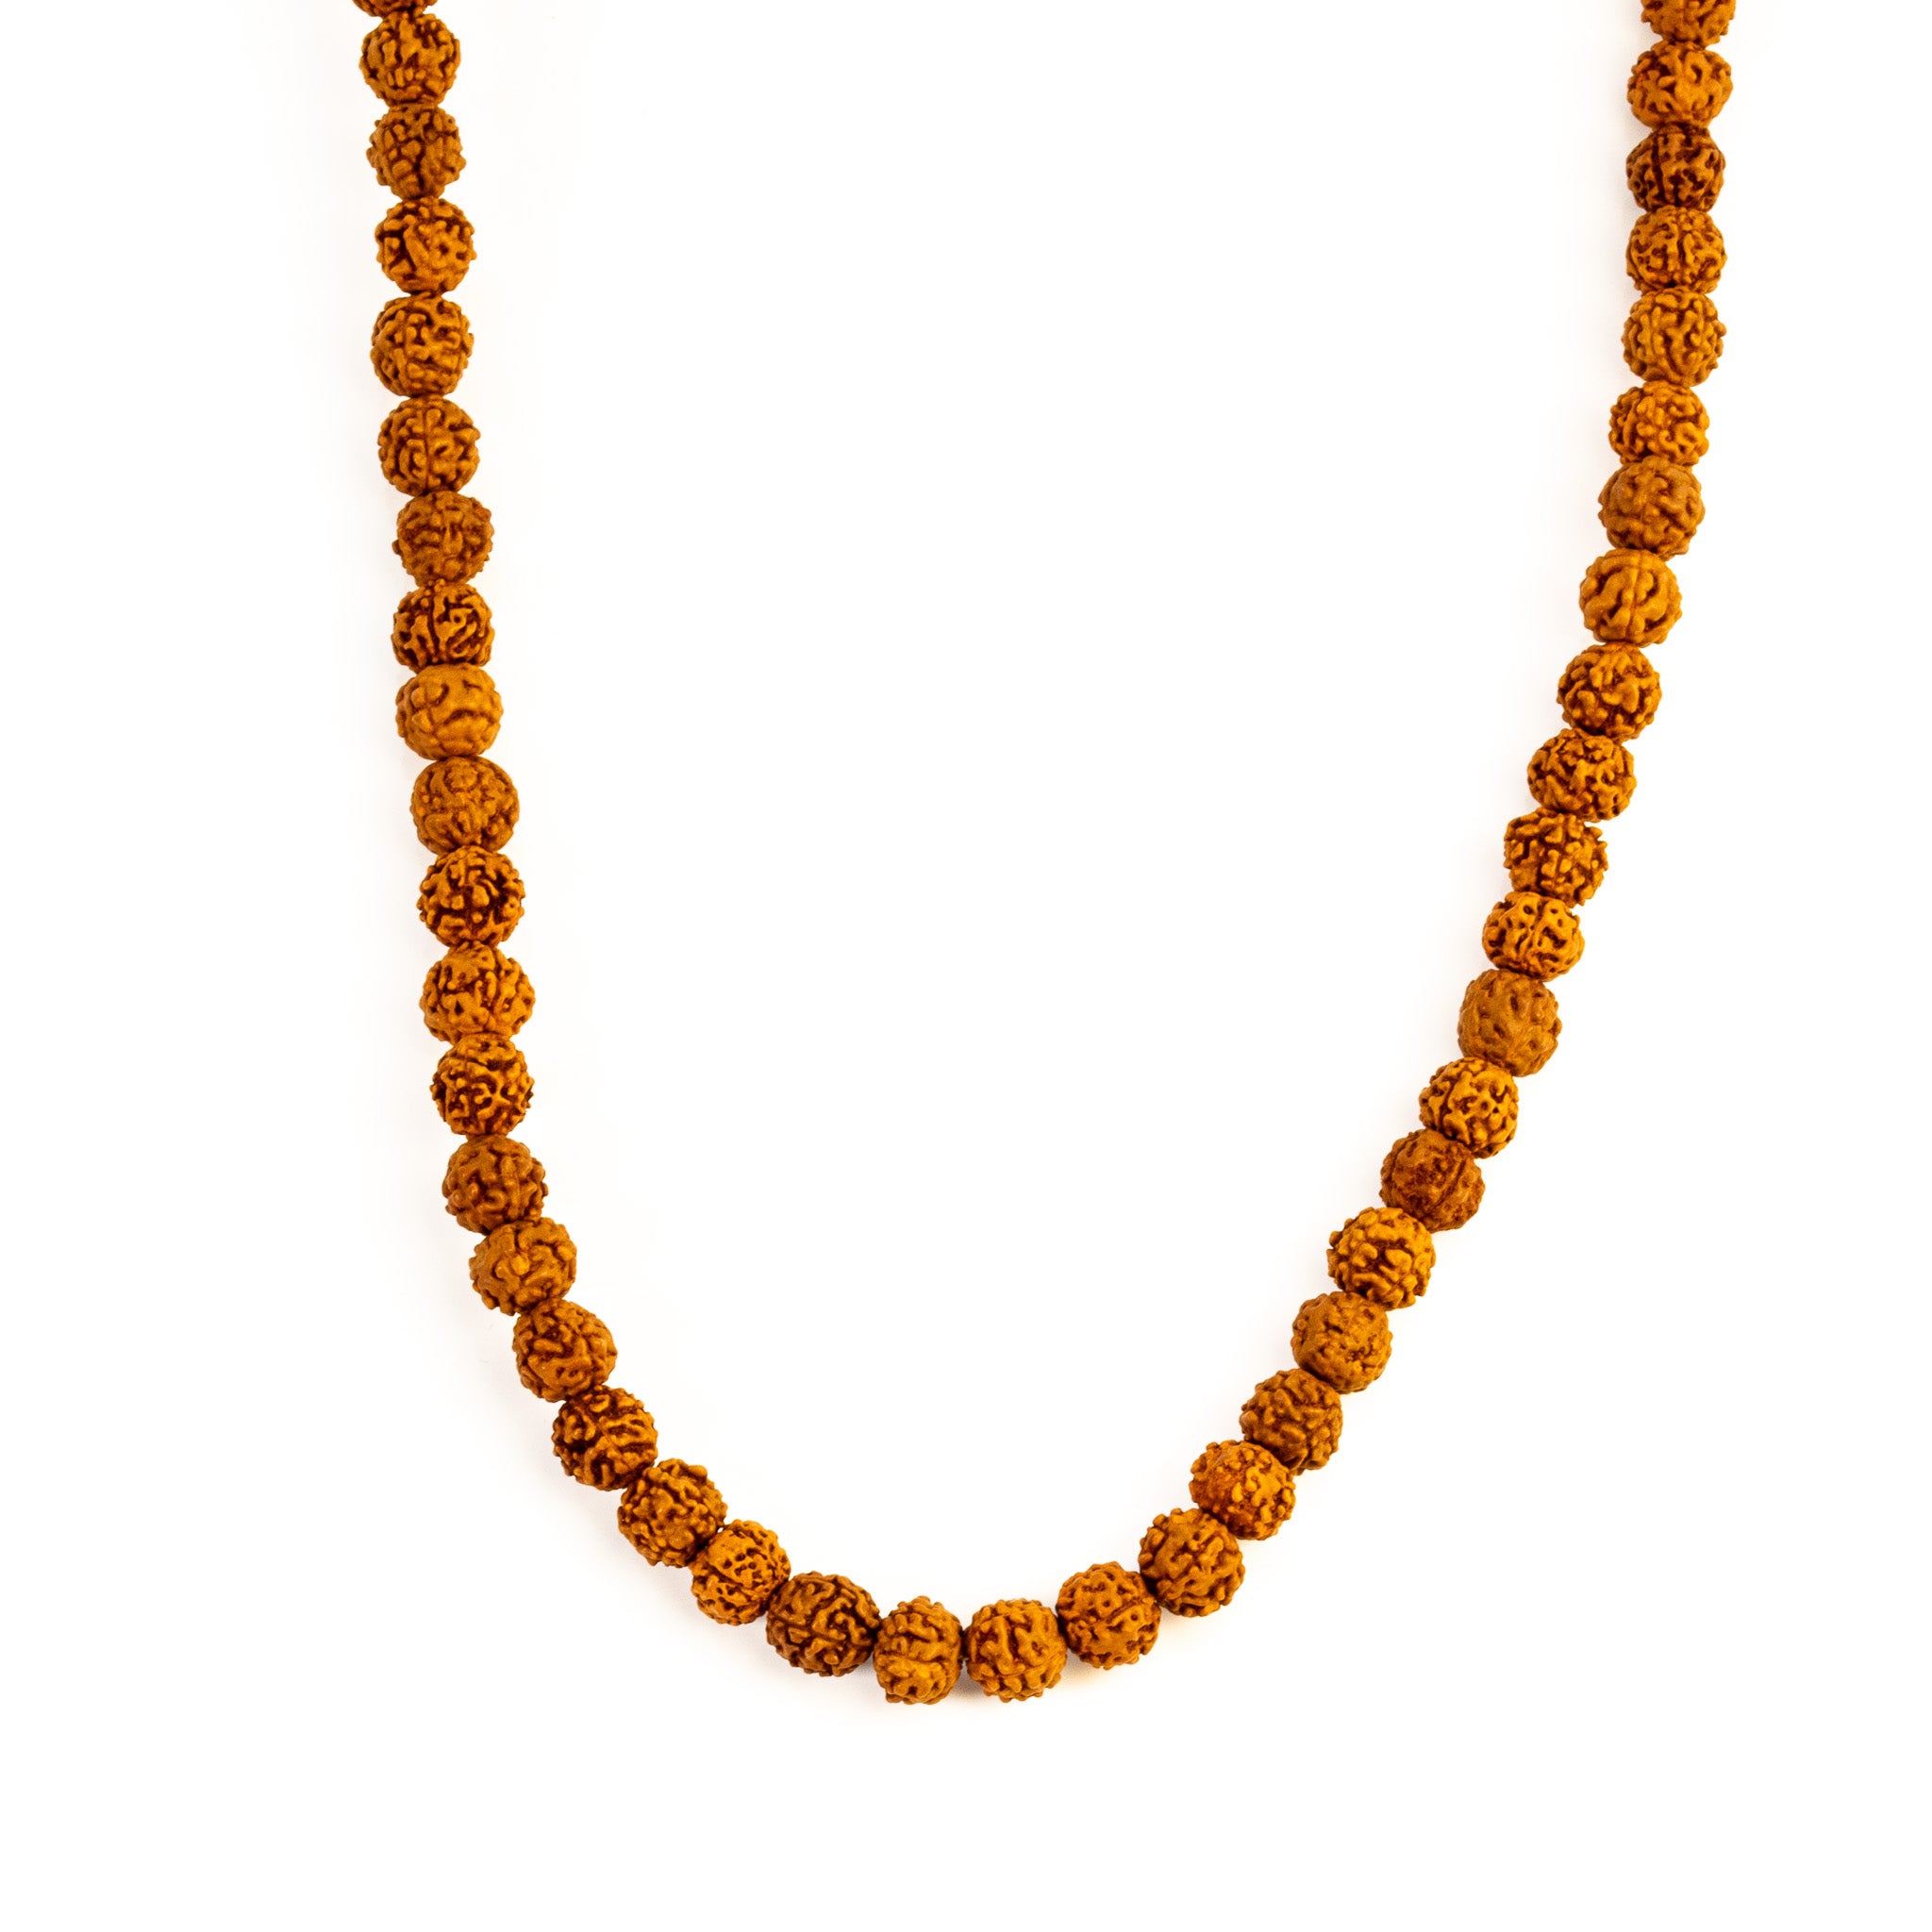 5 Mukhi Mala 8 mm 108 beads for intellect and meditation